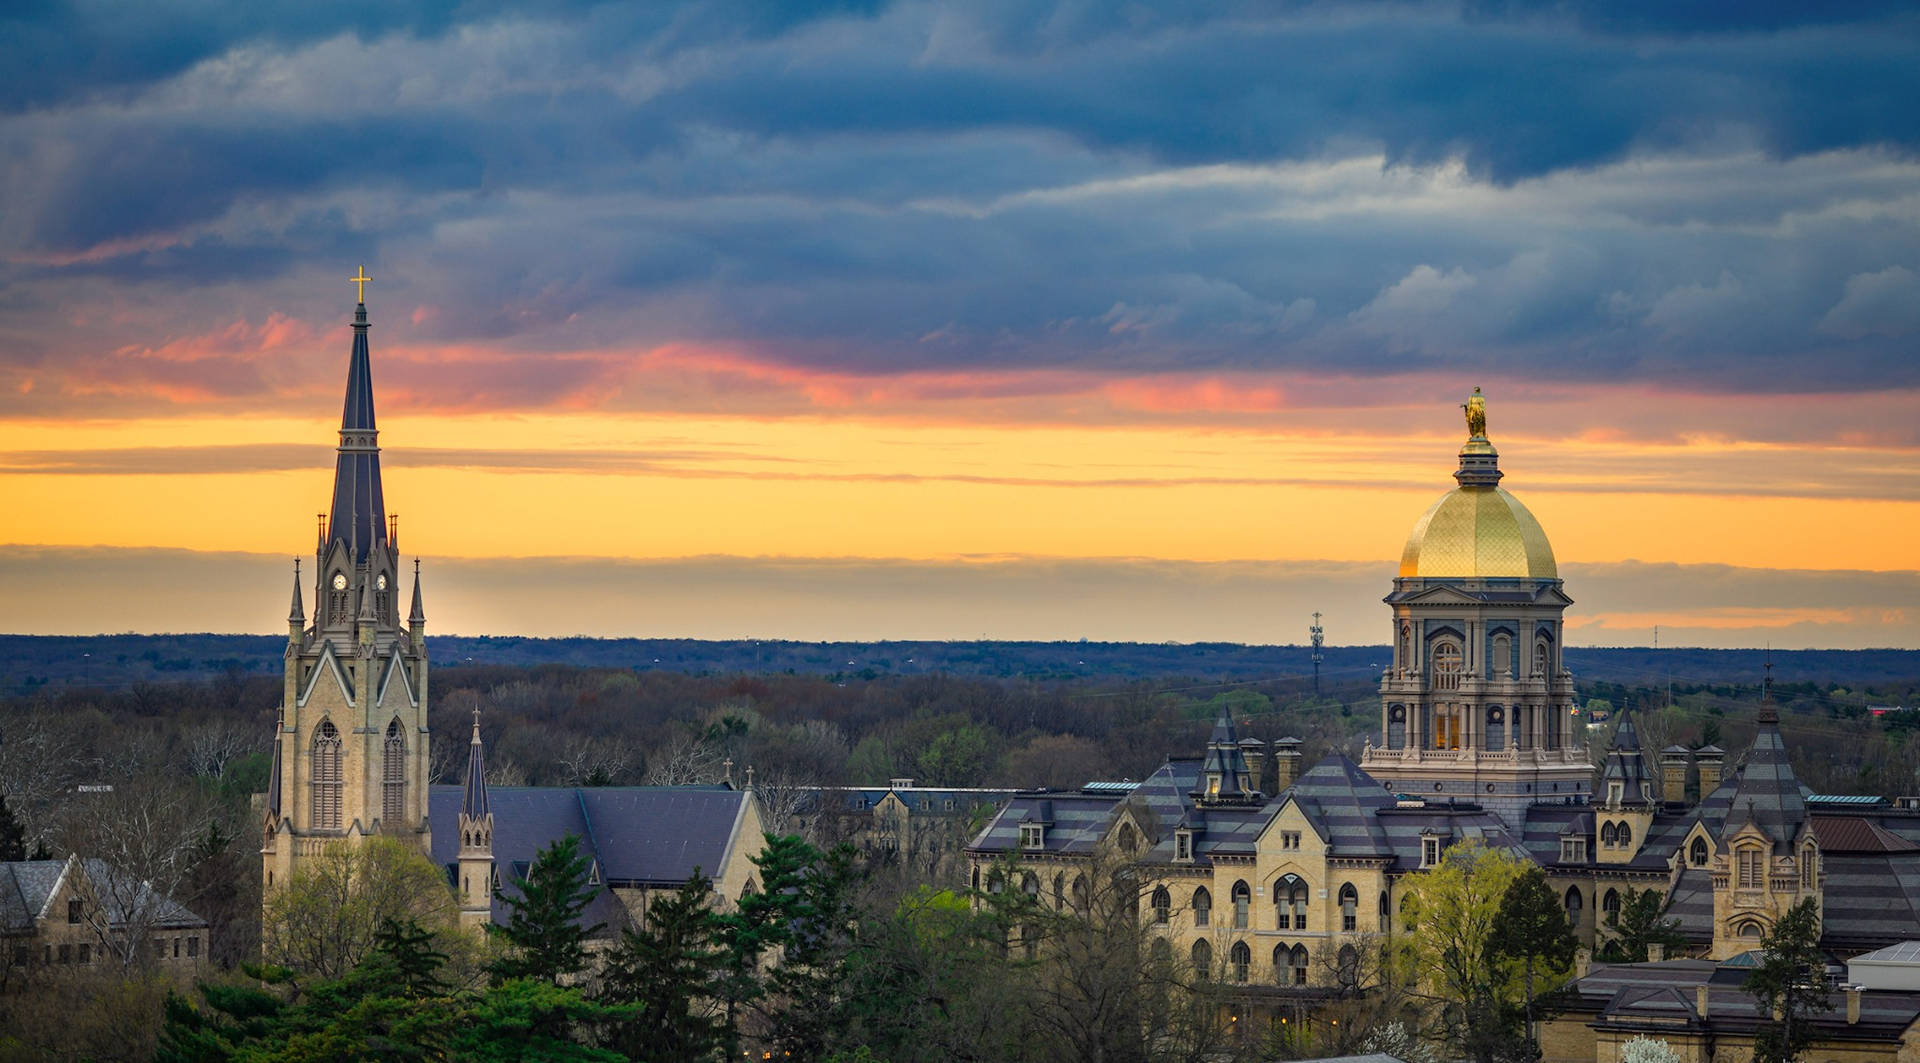 University Of Notre Dame Buildings Under Sunset Sky Wallpaper